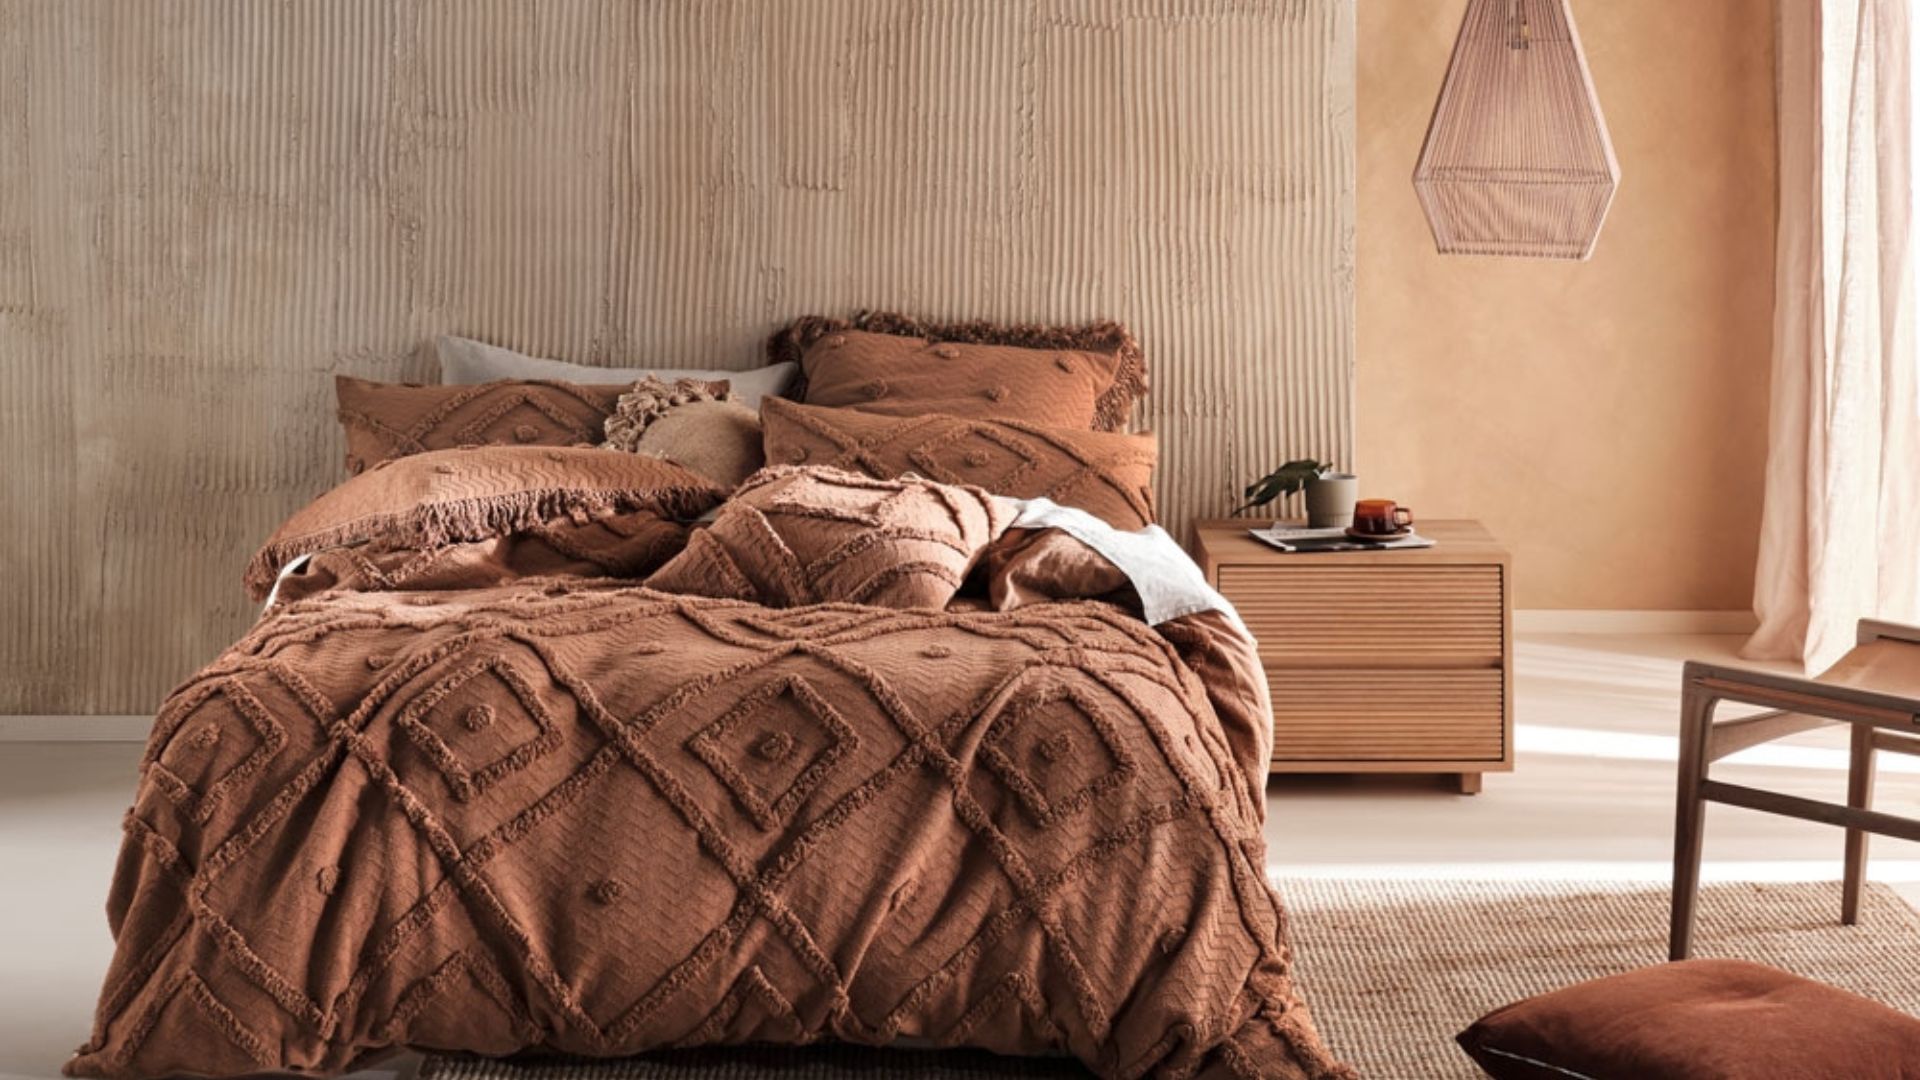 5 Luxe Autumn Bedding Styling Ideas & Tips